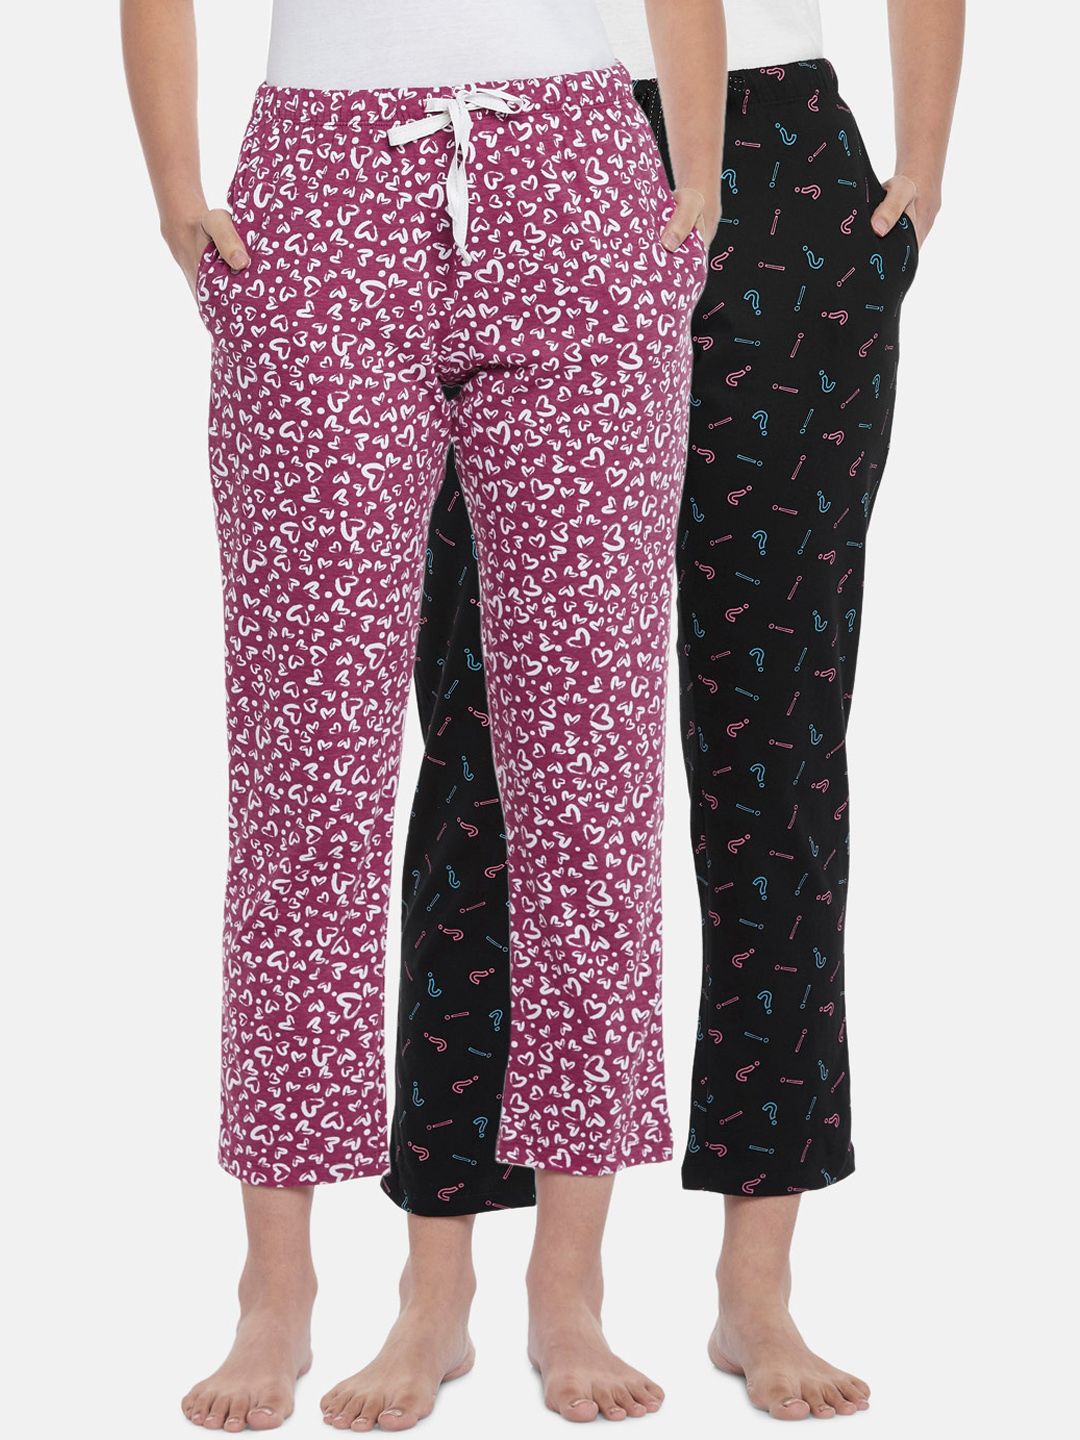 Dreamz by Pantaloons Women Pack Of 2 Pink & Black Printed Lounge Pants Price in India